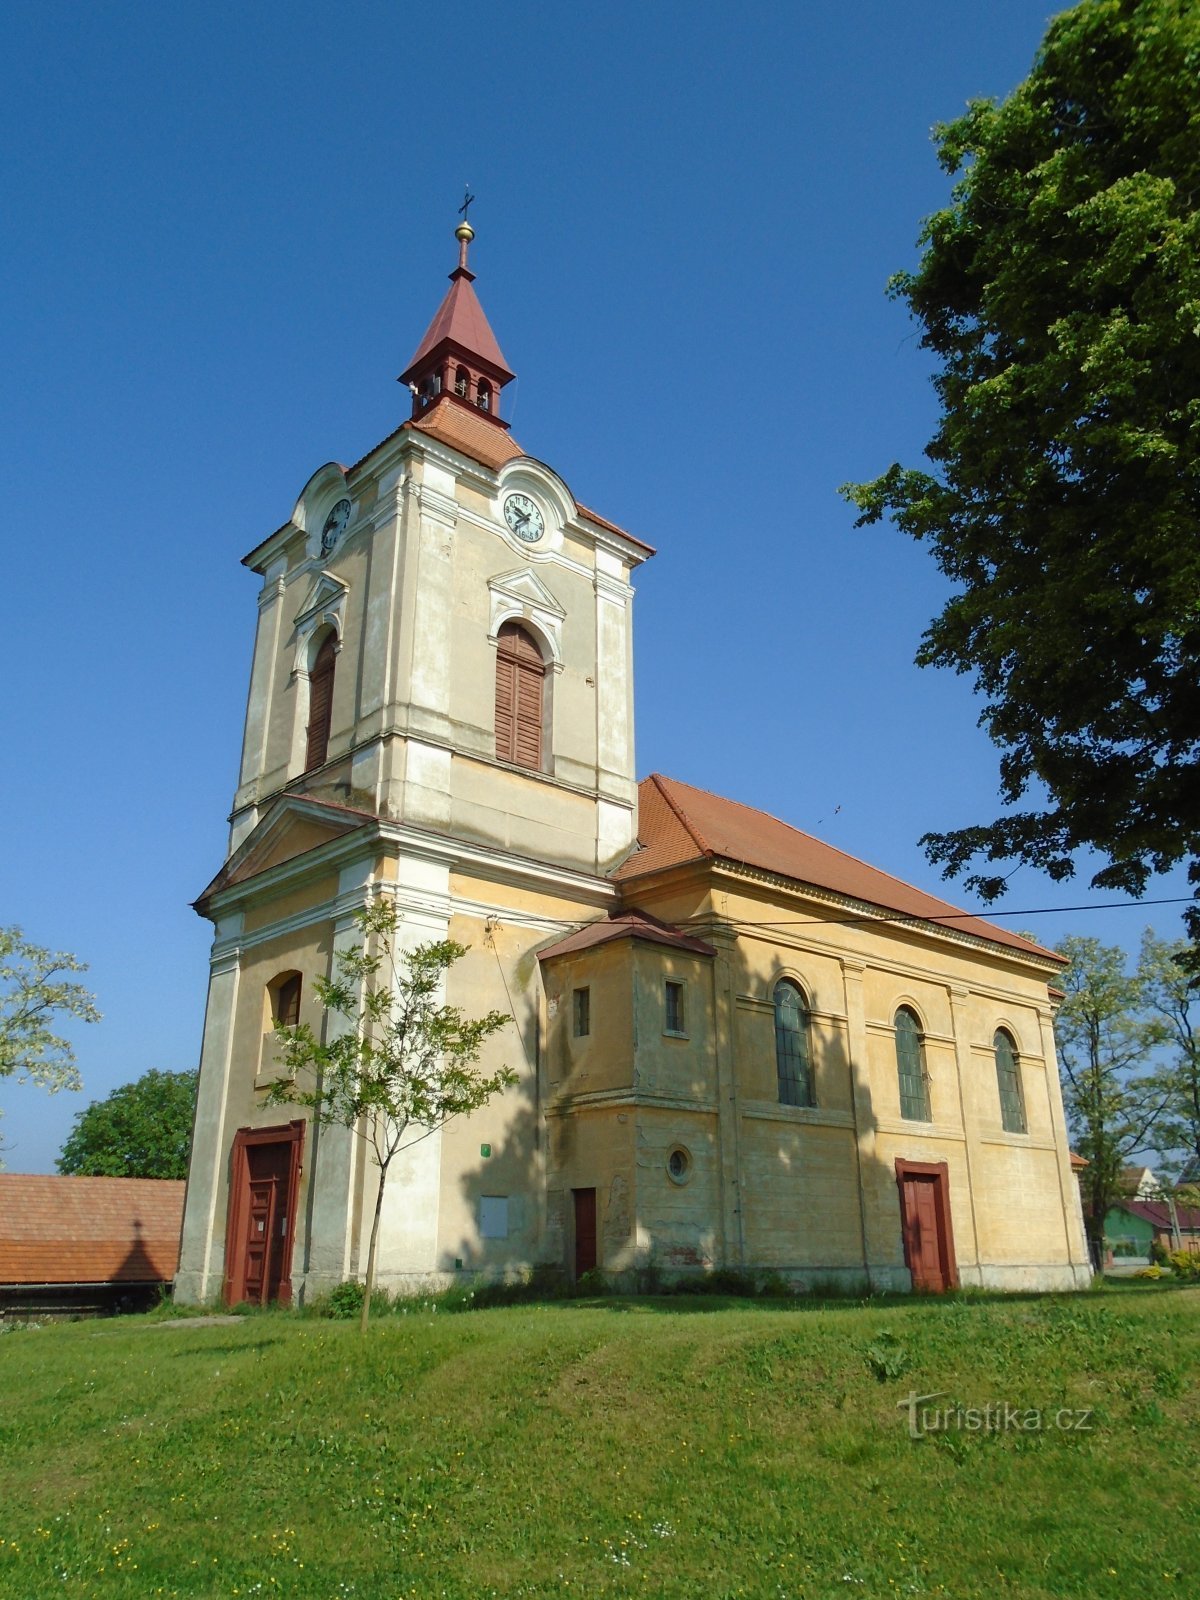 Cerkev sv. Petra in Pavla (Jeníkovice, 12.5.2018. avgust XNUMX)